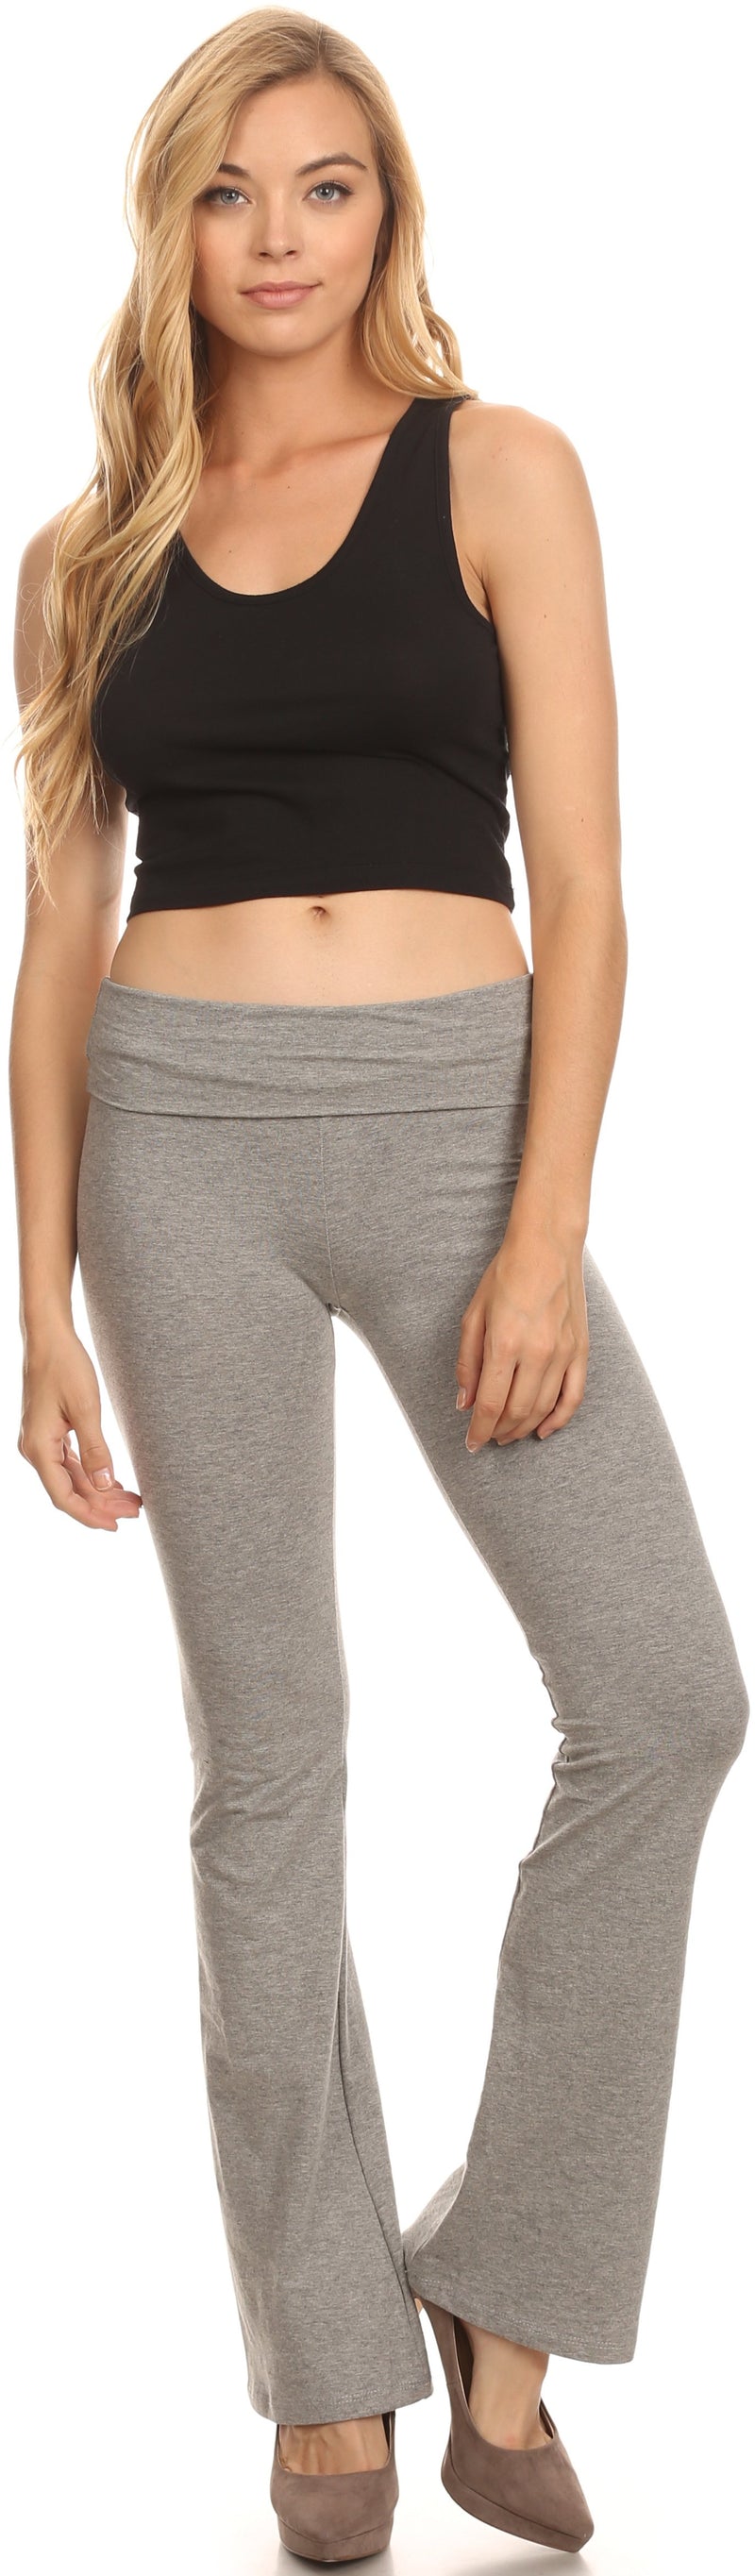 Sakkas Cotton Blend Yoga Pilates Foldover Waist Pants - Made in USA